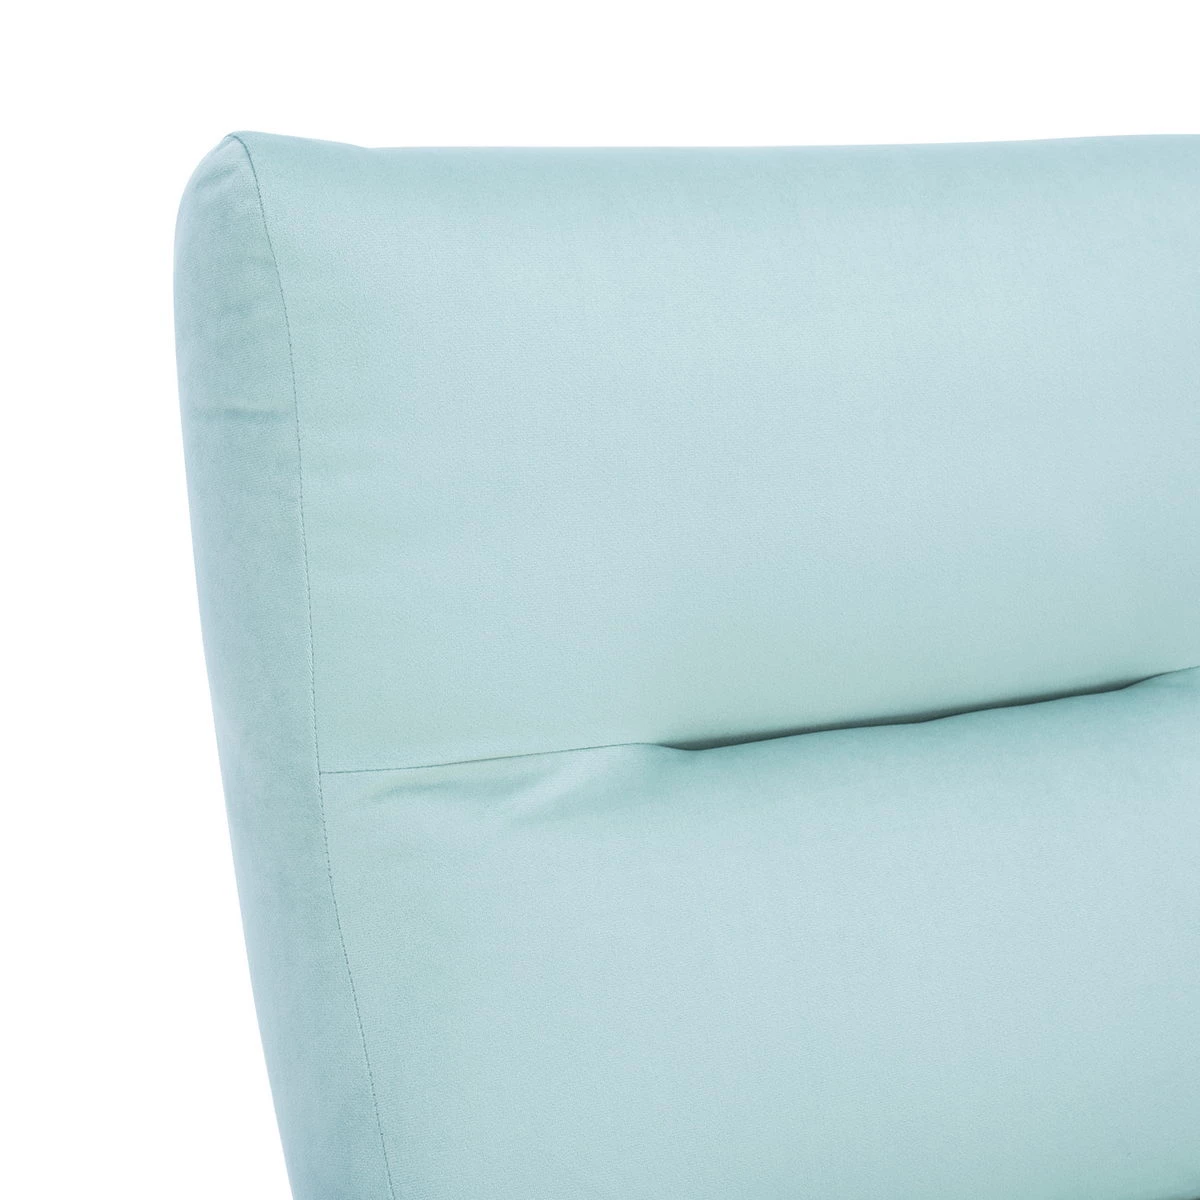 Кресло-качалка Leset Милано (Импэкс). Цвет каркаса: Венге; Цвет обивки: V14 бирюзовый